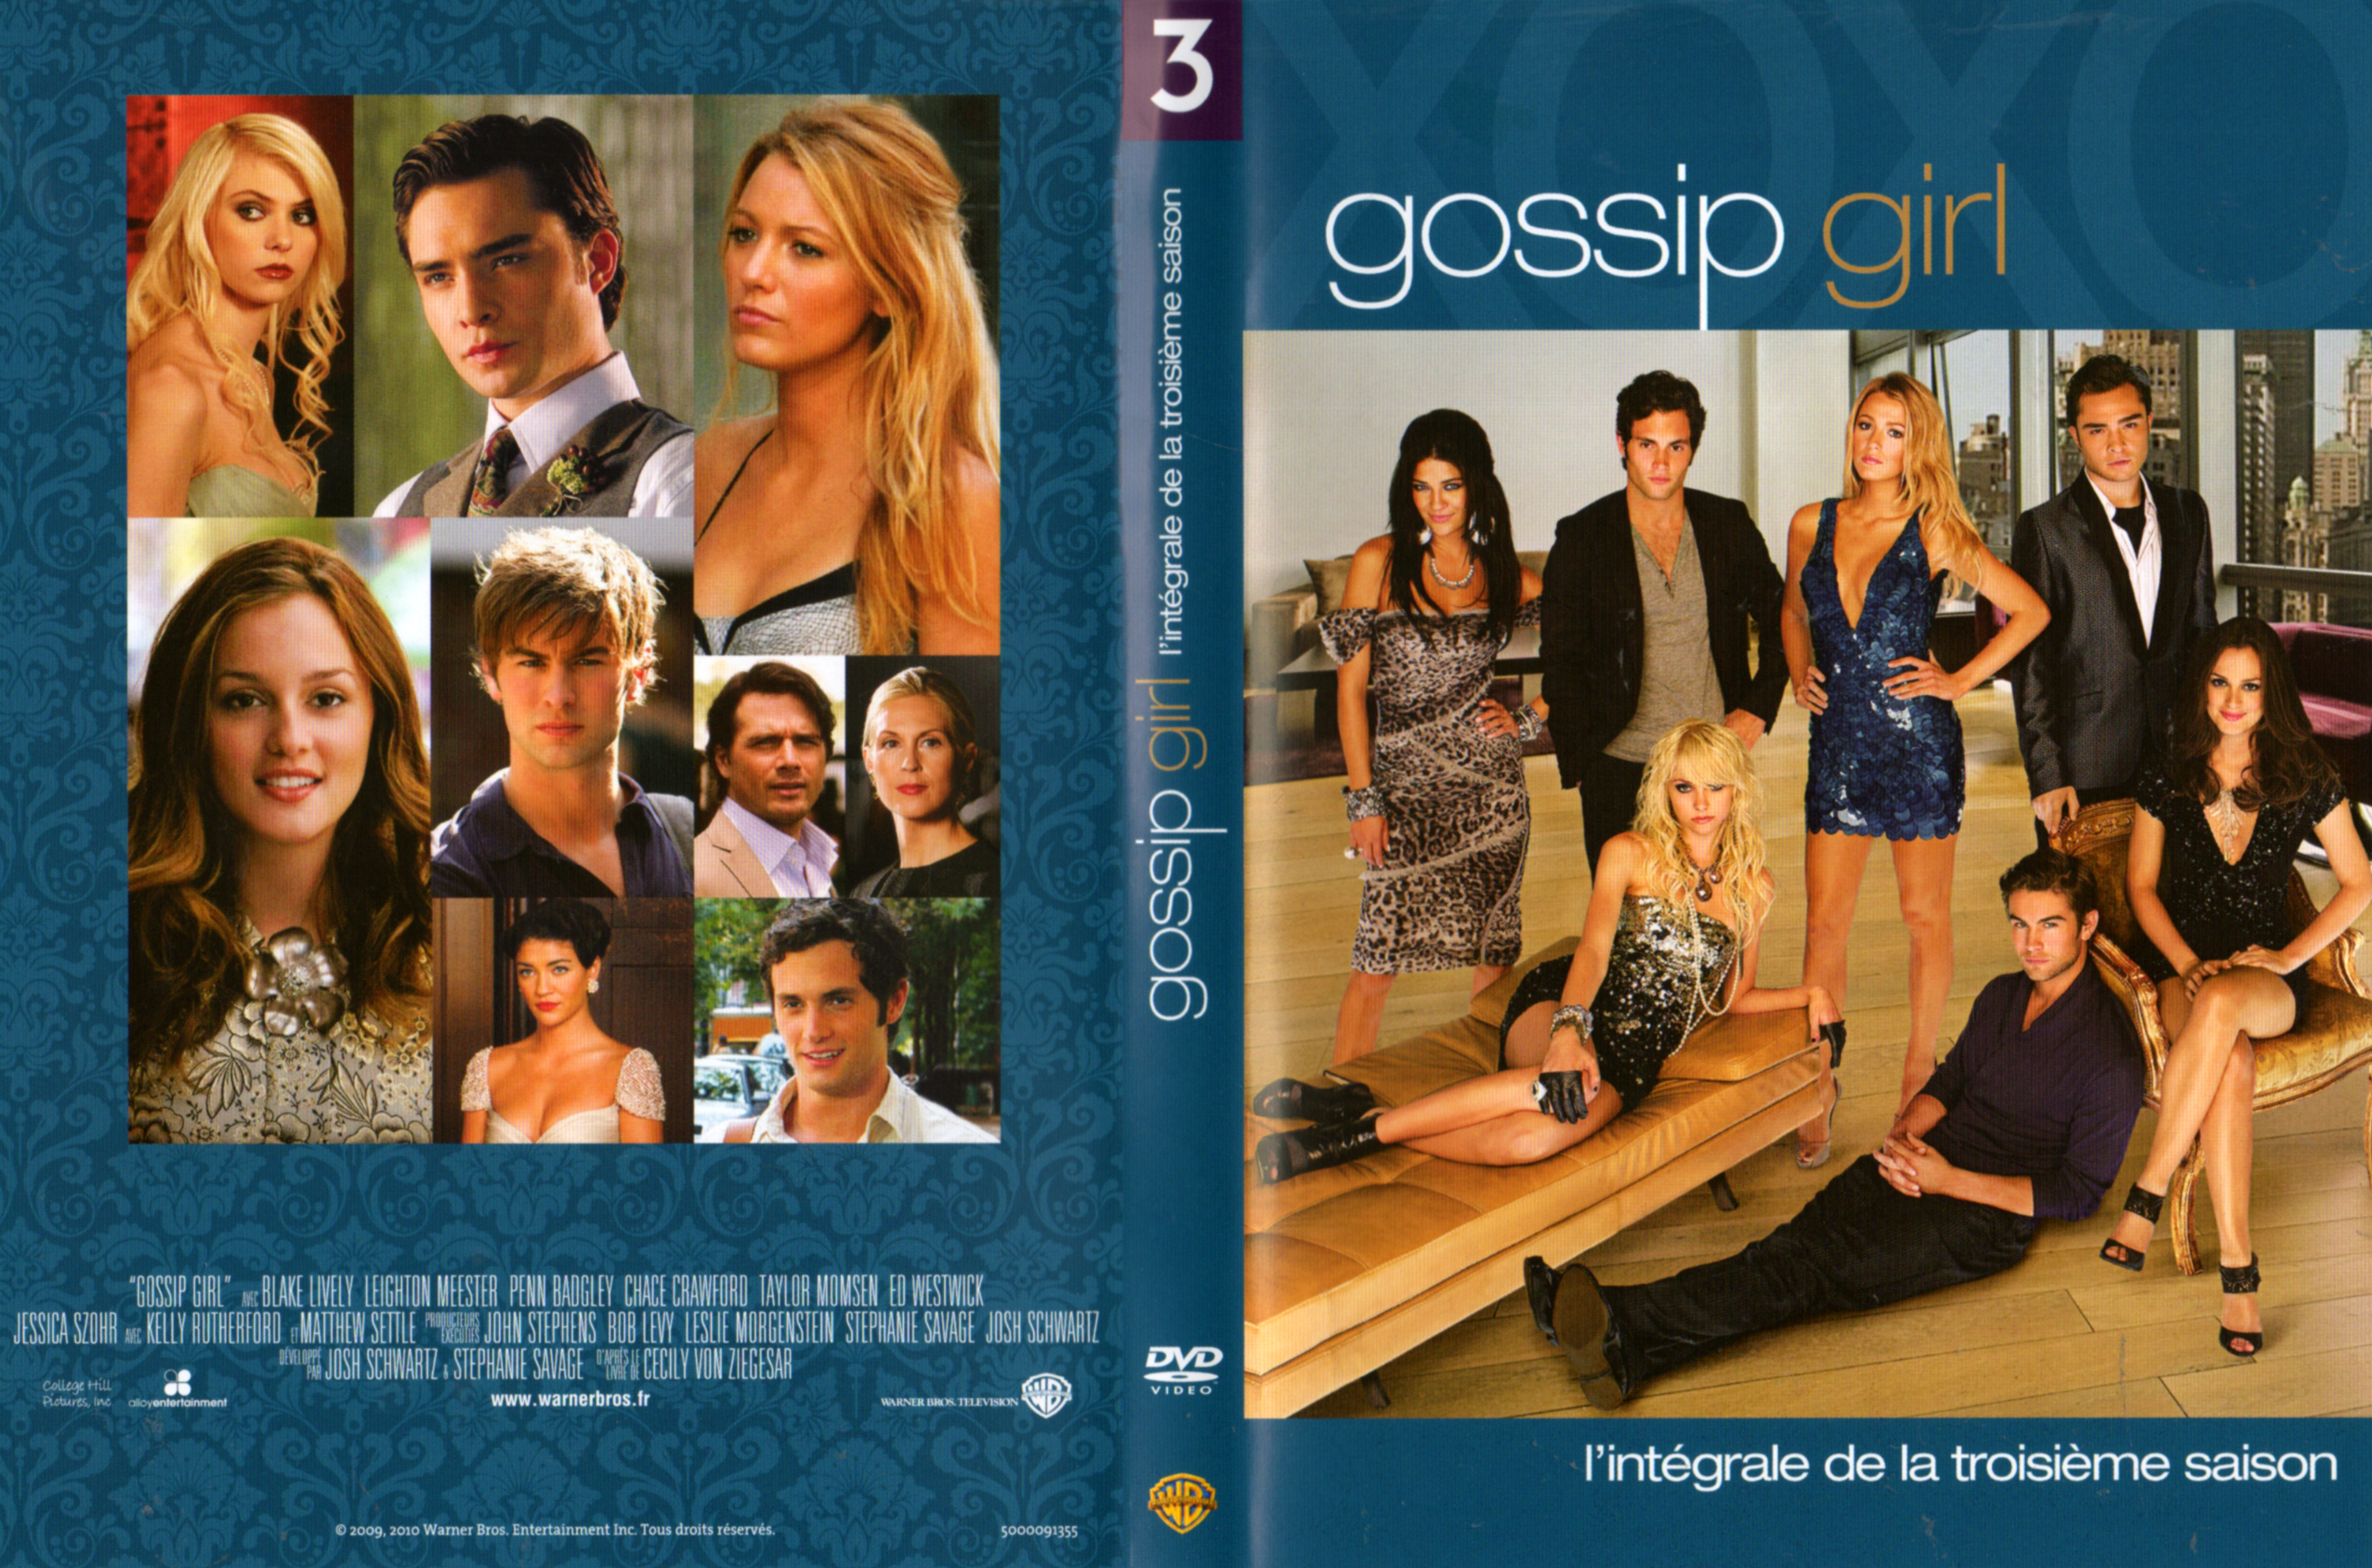 Jaquette DVD Gossip girl Saison 3 COFFRET v2